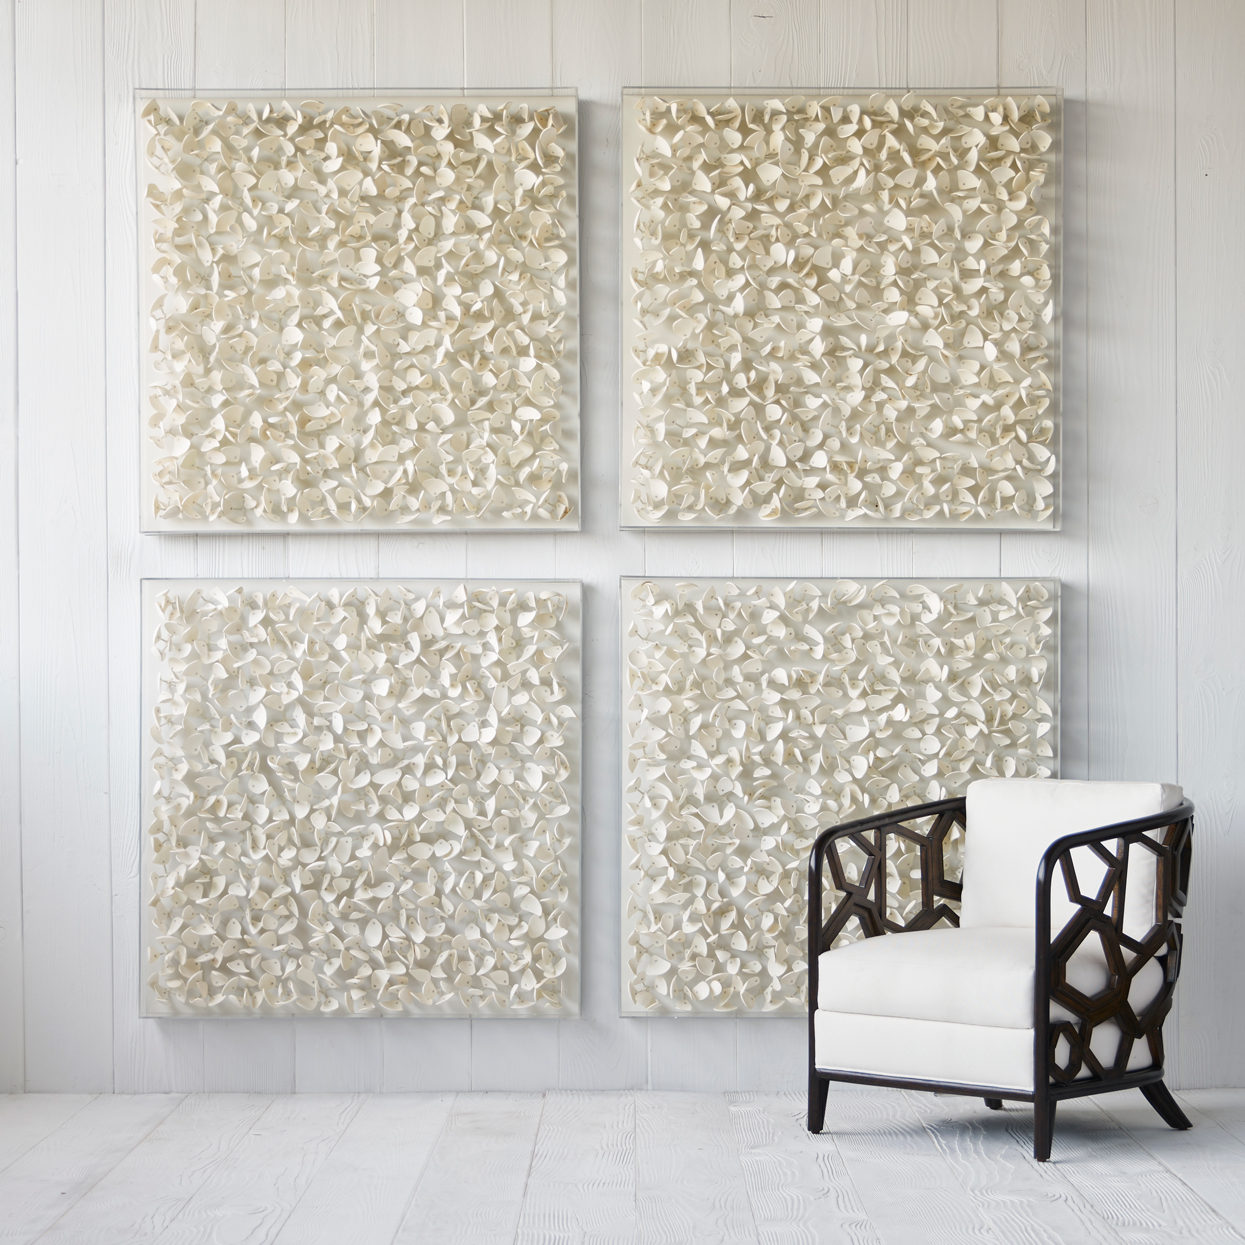 Marble texture Coco Chanel - Wall Art, Hanging Wall Decor, Home Decor -  Arteebo